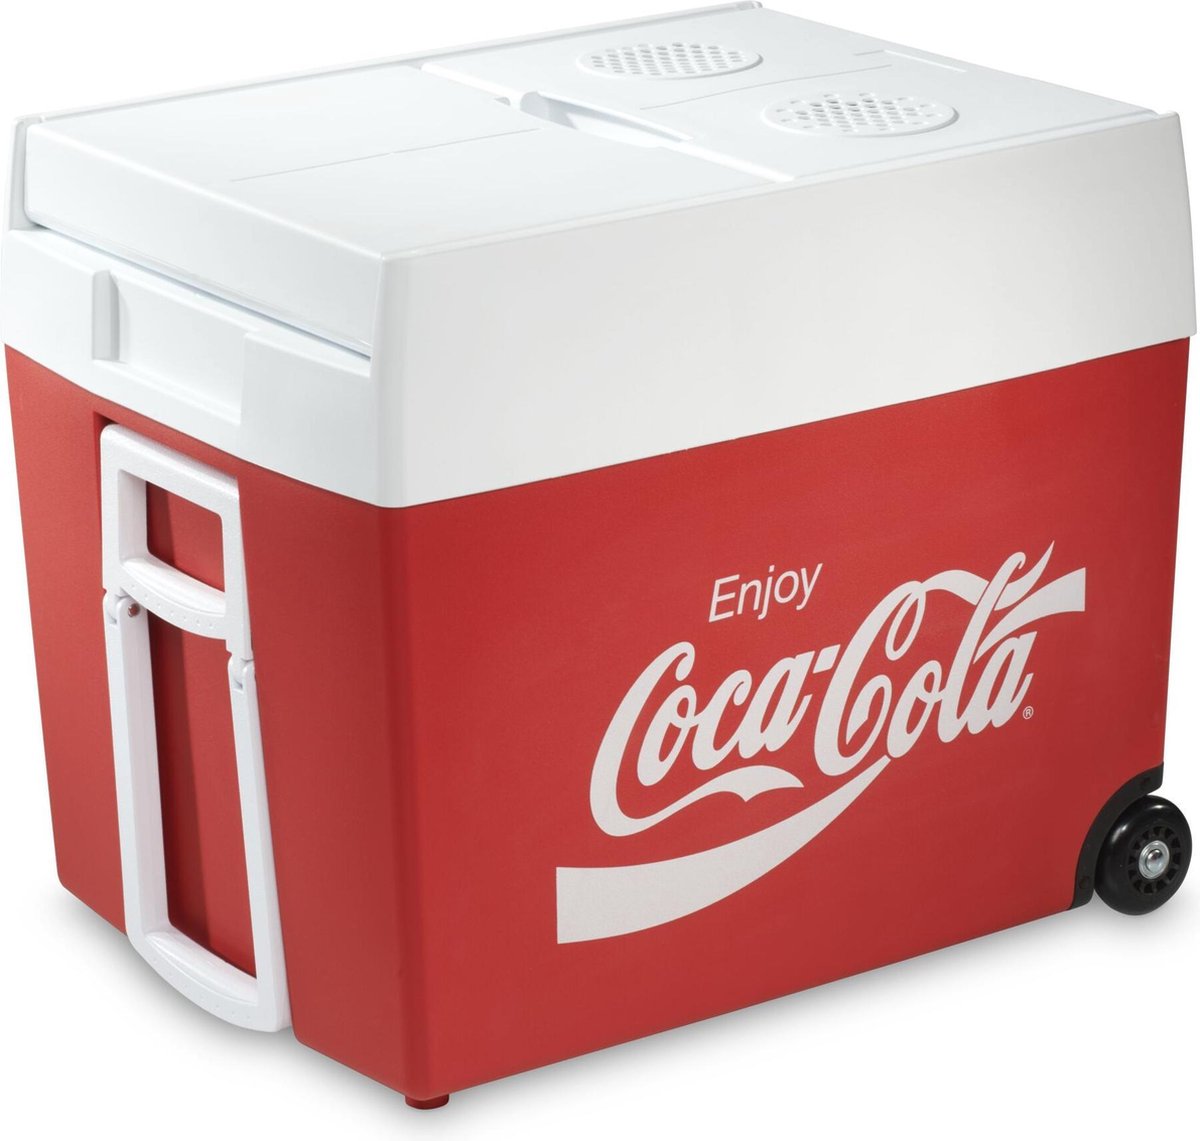 Mobicool Coca-Cola style MT48W Thermo-elektrische koelbox - 48L - 12/230v - rood/wit